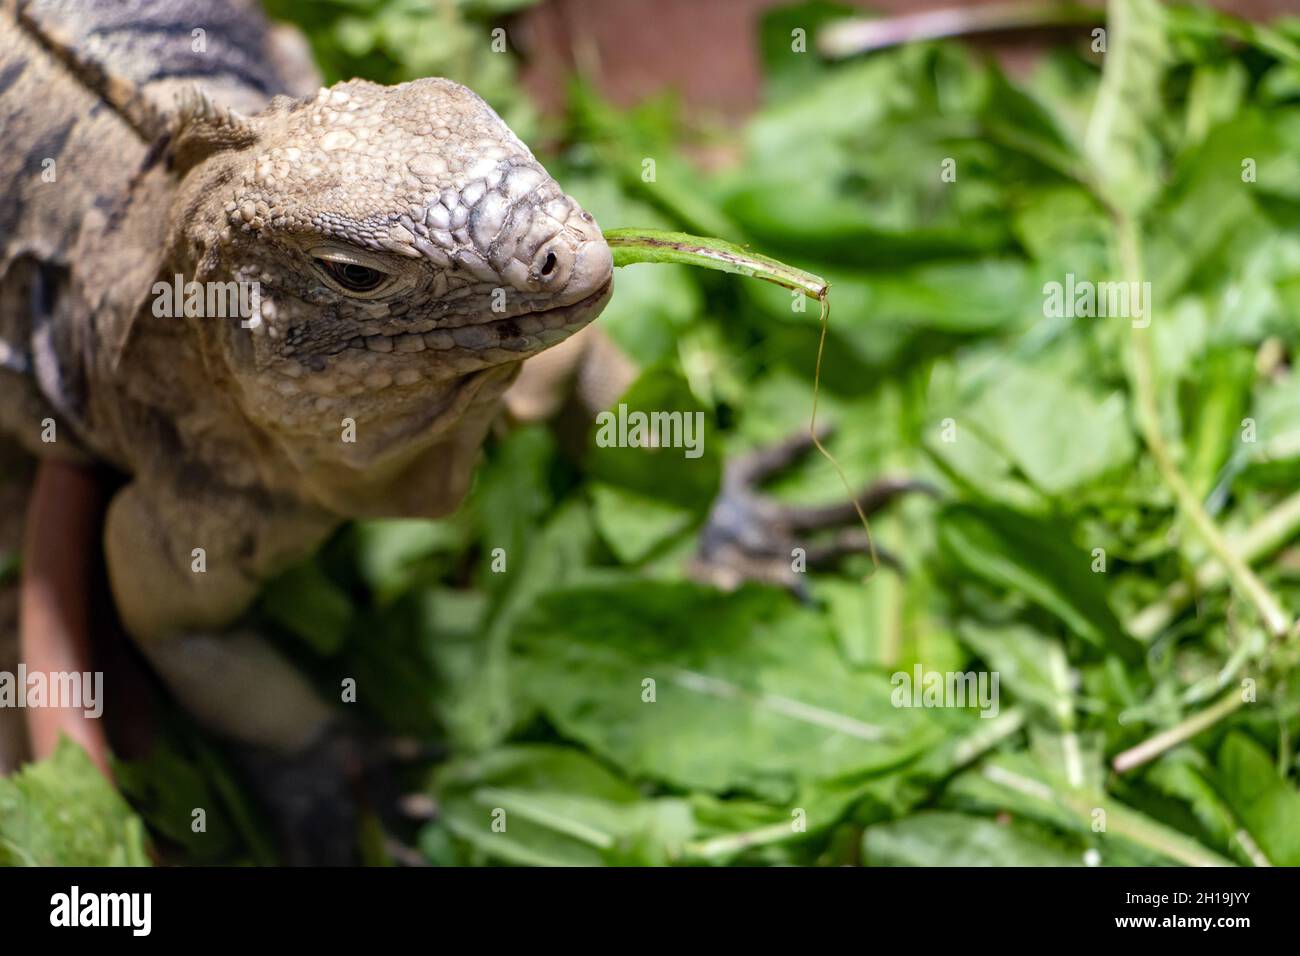 La iguana de roca cubana - iguana de tierra cubana (Cyclura nubila) está alimentando una planta verde de un tazón Foto de stock